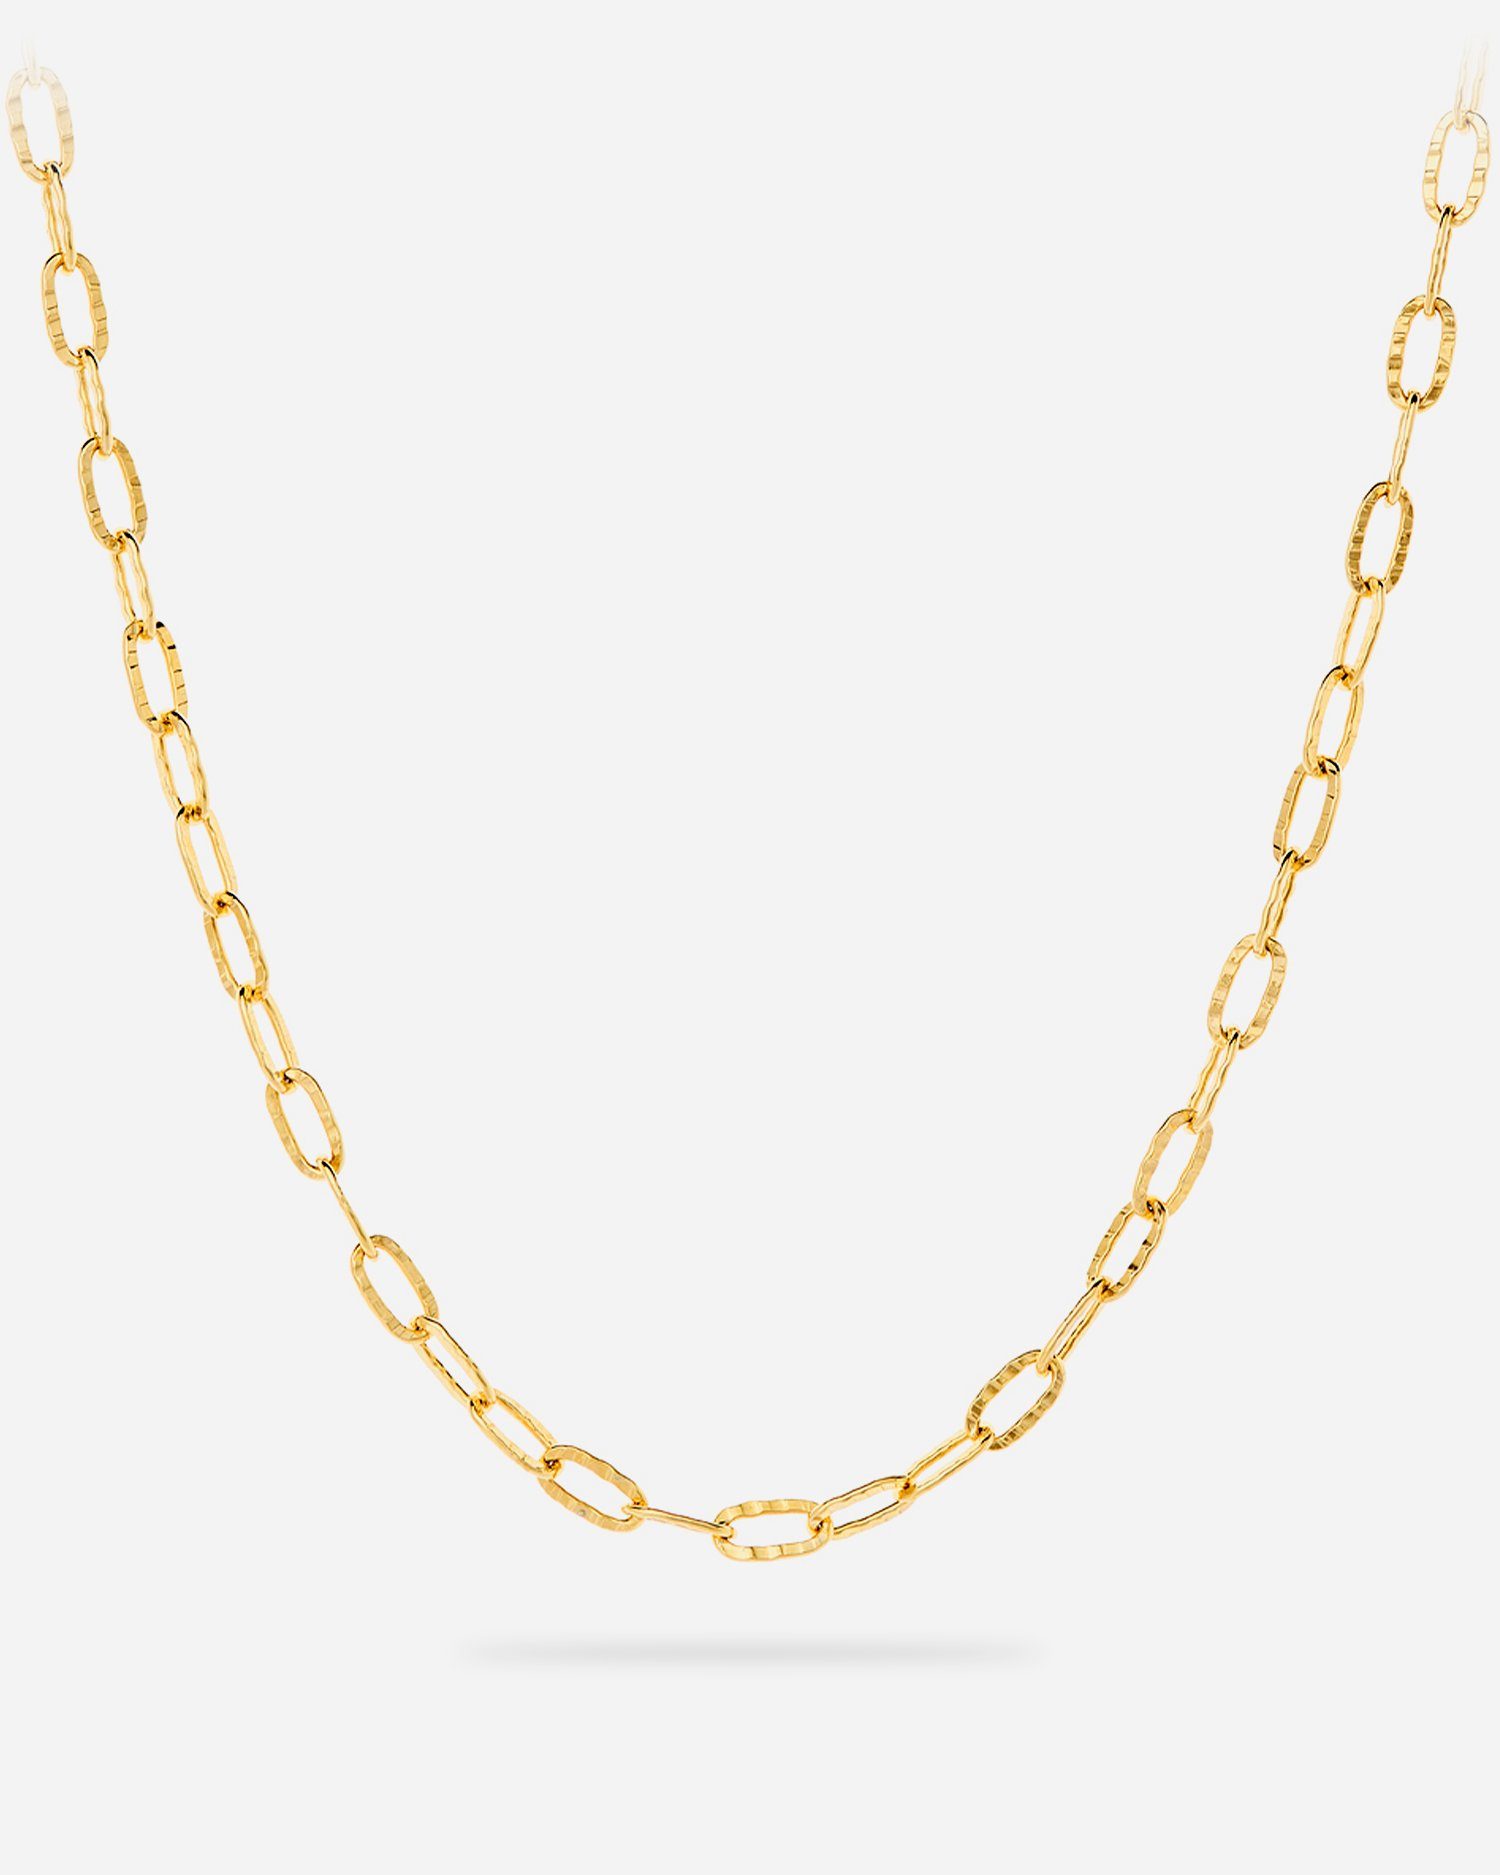 925, Damen ohne vergoldet Anhänger Halskette Silber 45-50 Pernille Karat Alba Kette Corydon 18 cm,